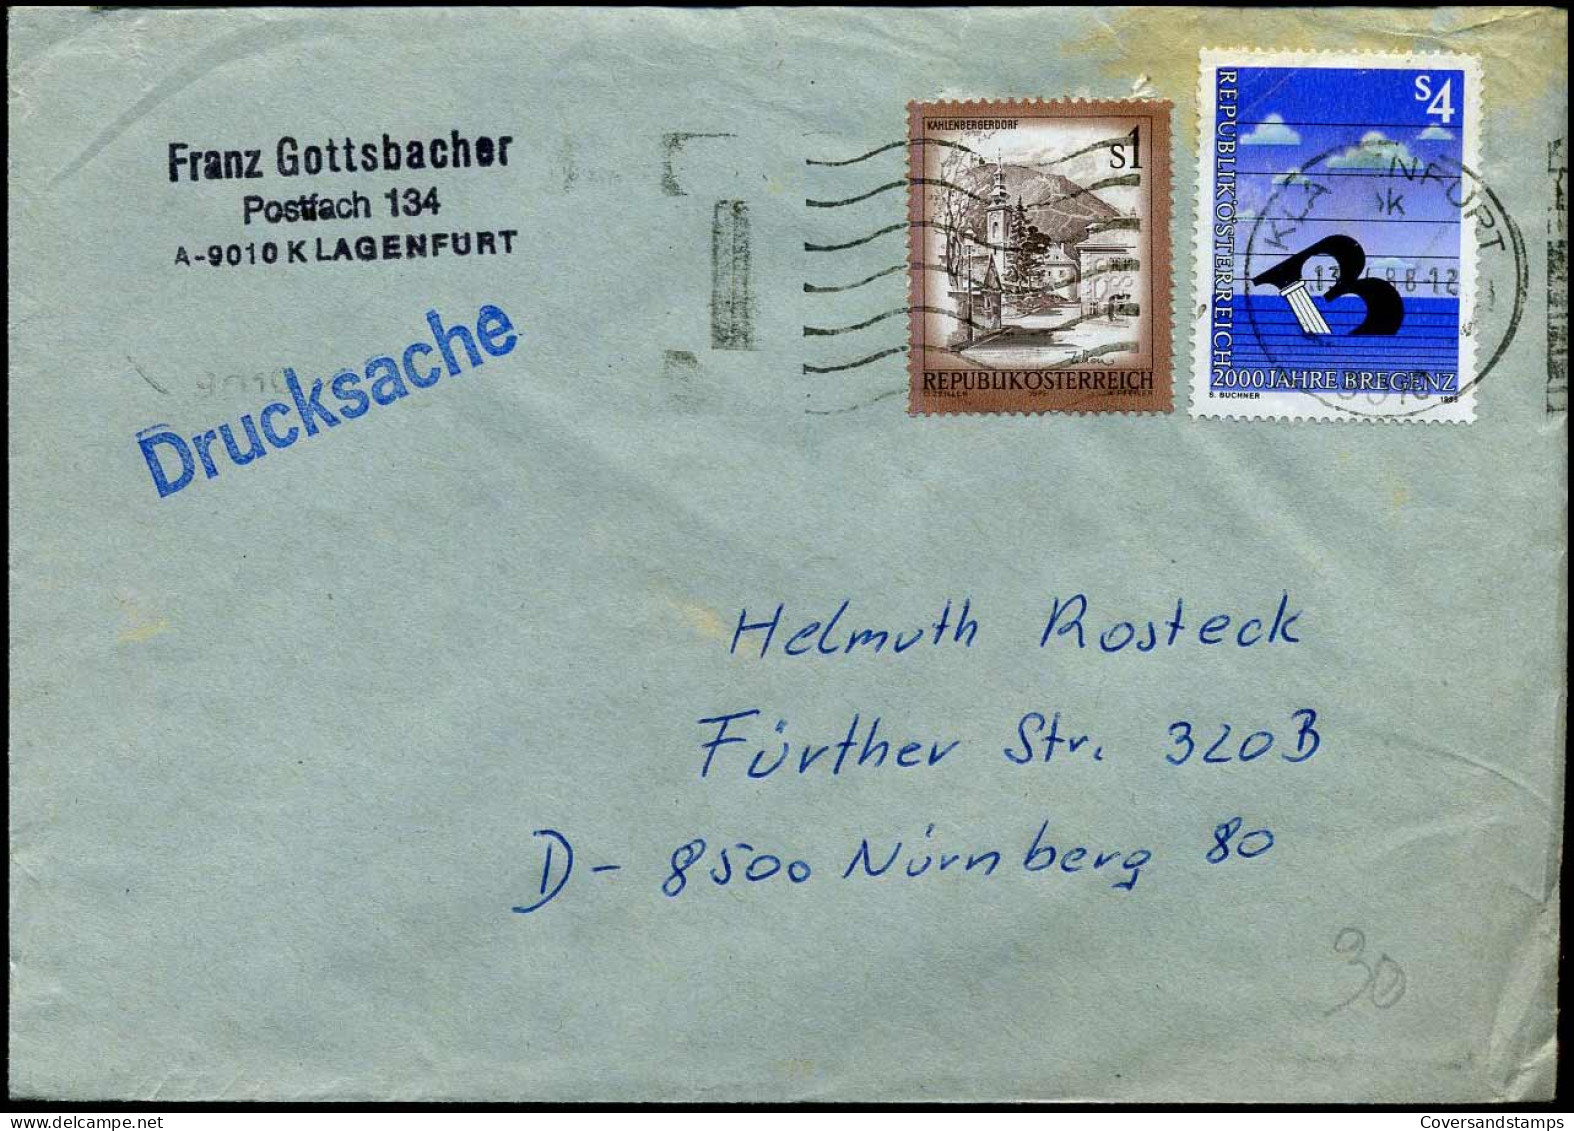 Cover To Nürnberg, Germany - "Franz Gottsbacher, Klagenfurt" - Covers & Documents